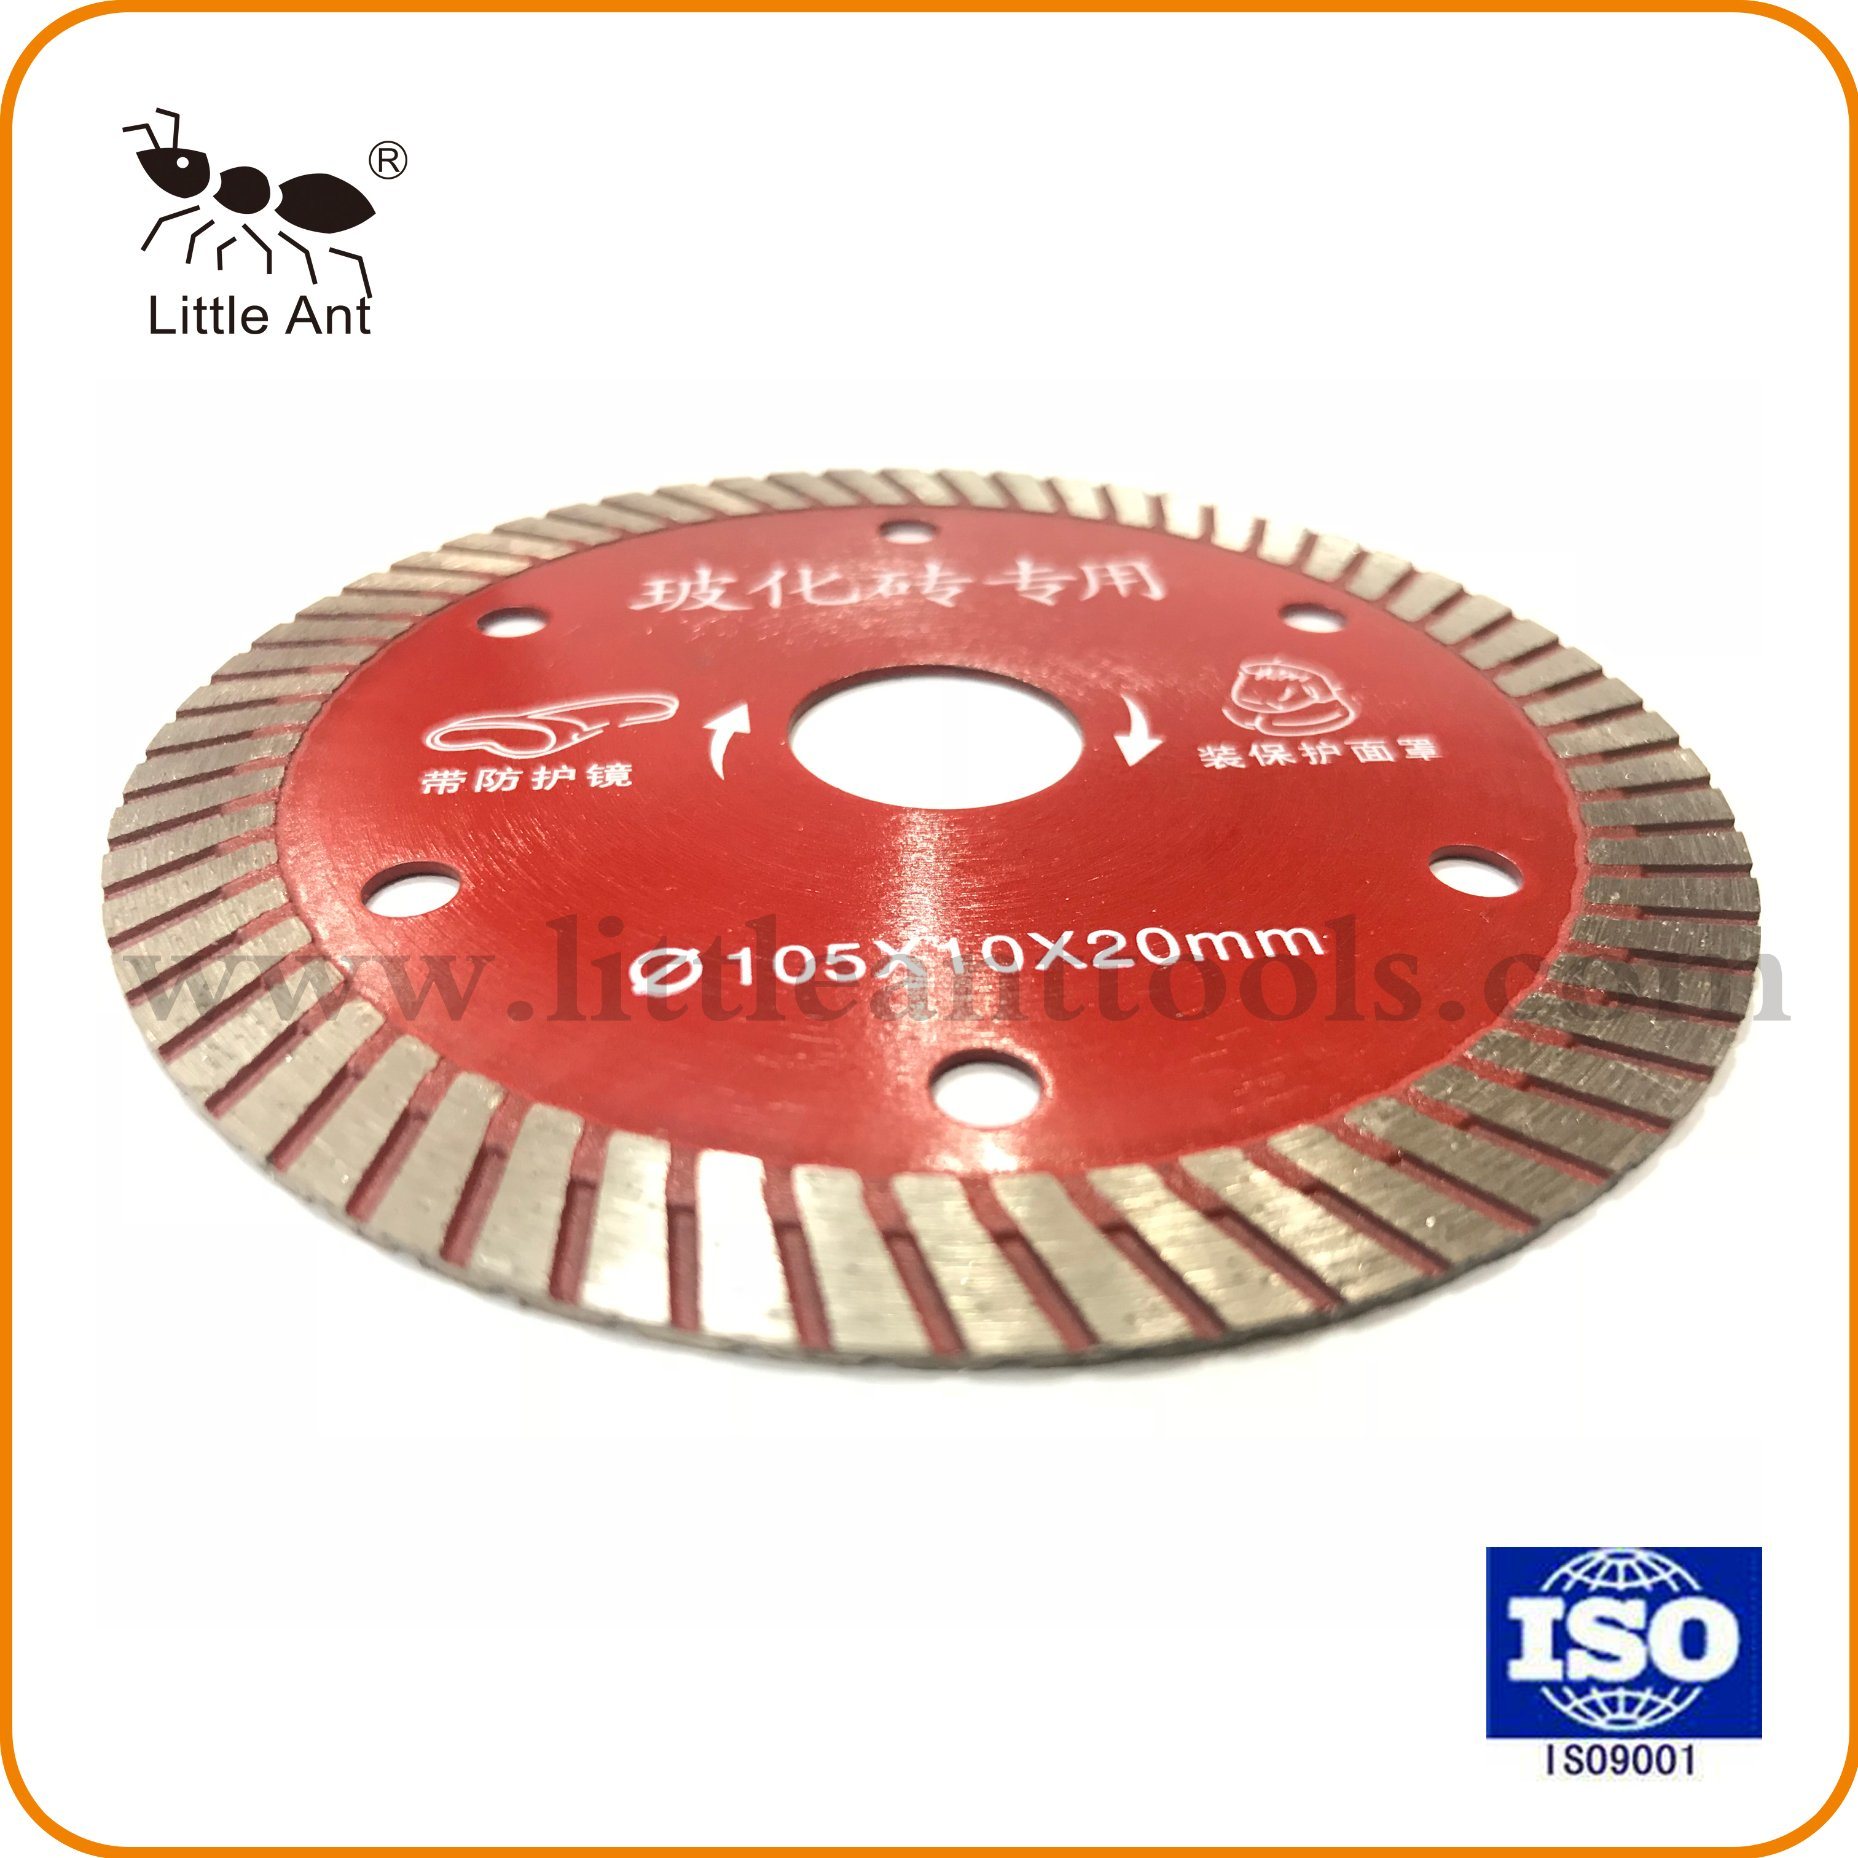 105mm Super Thin Turbo Cutting Disk Hardware Tools Diamond Saw Blade for Ceramic